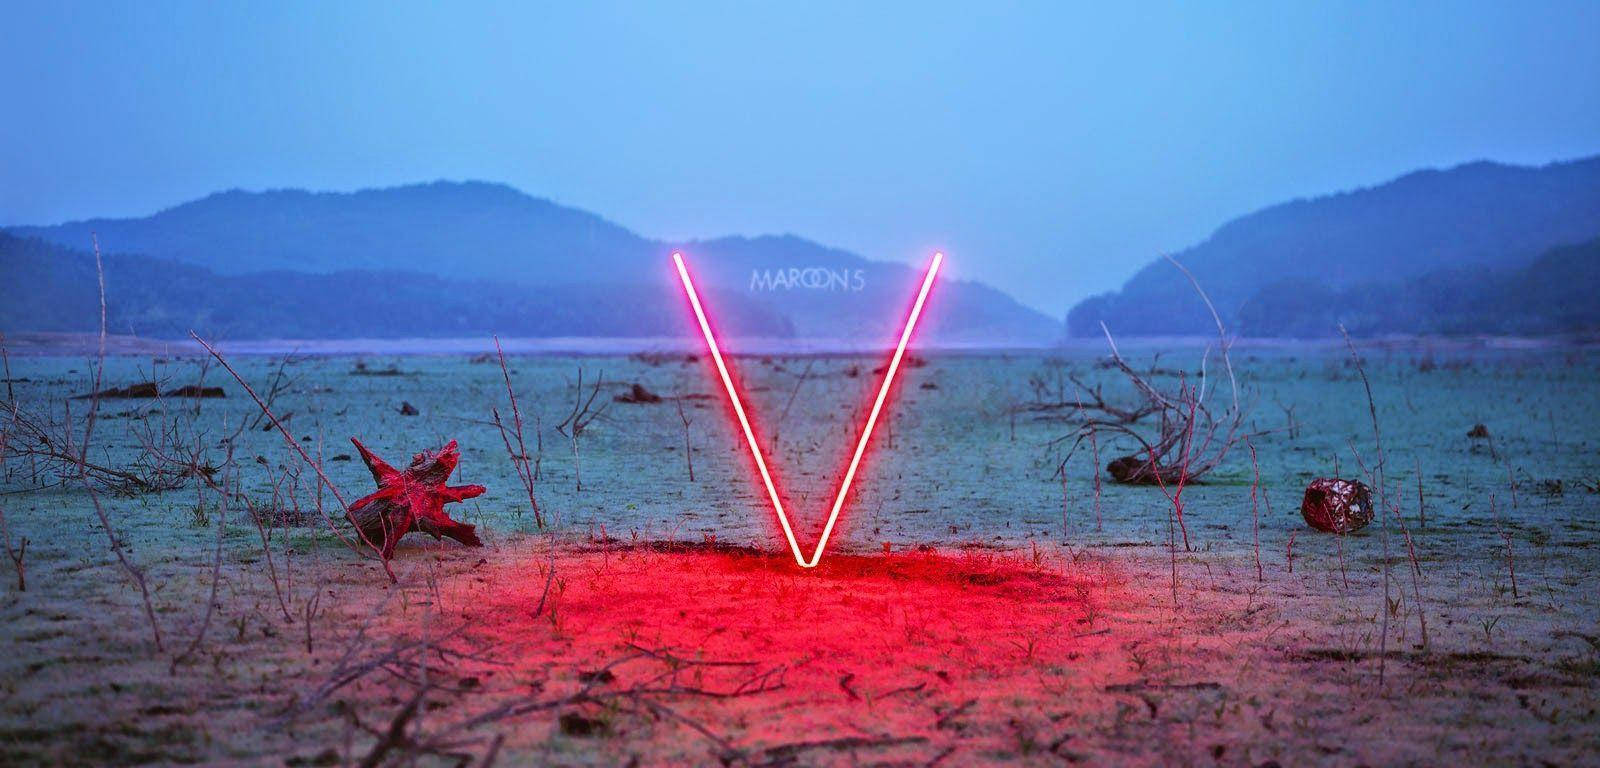 Download Maroon 5 V Album Cover Wallpaper 